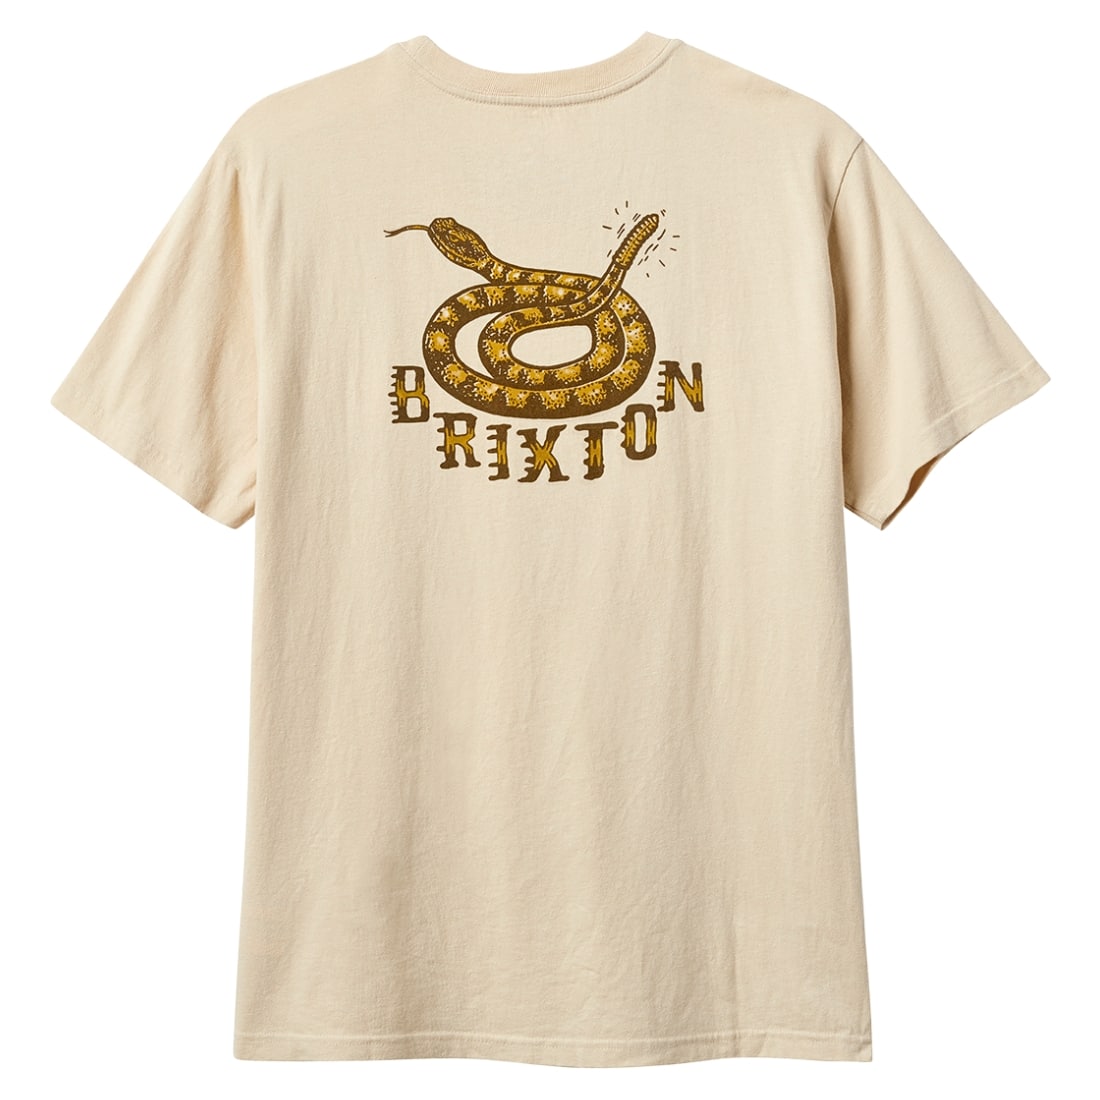 Brixton Homer T-Shirt - Cream Classic Wash - Mens Skate Brand T-Shirt by Brixton